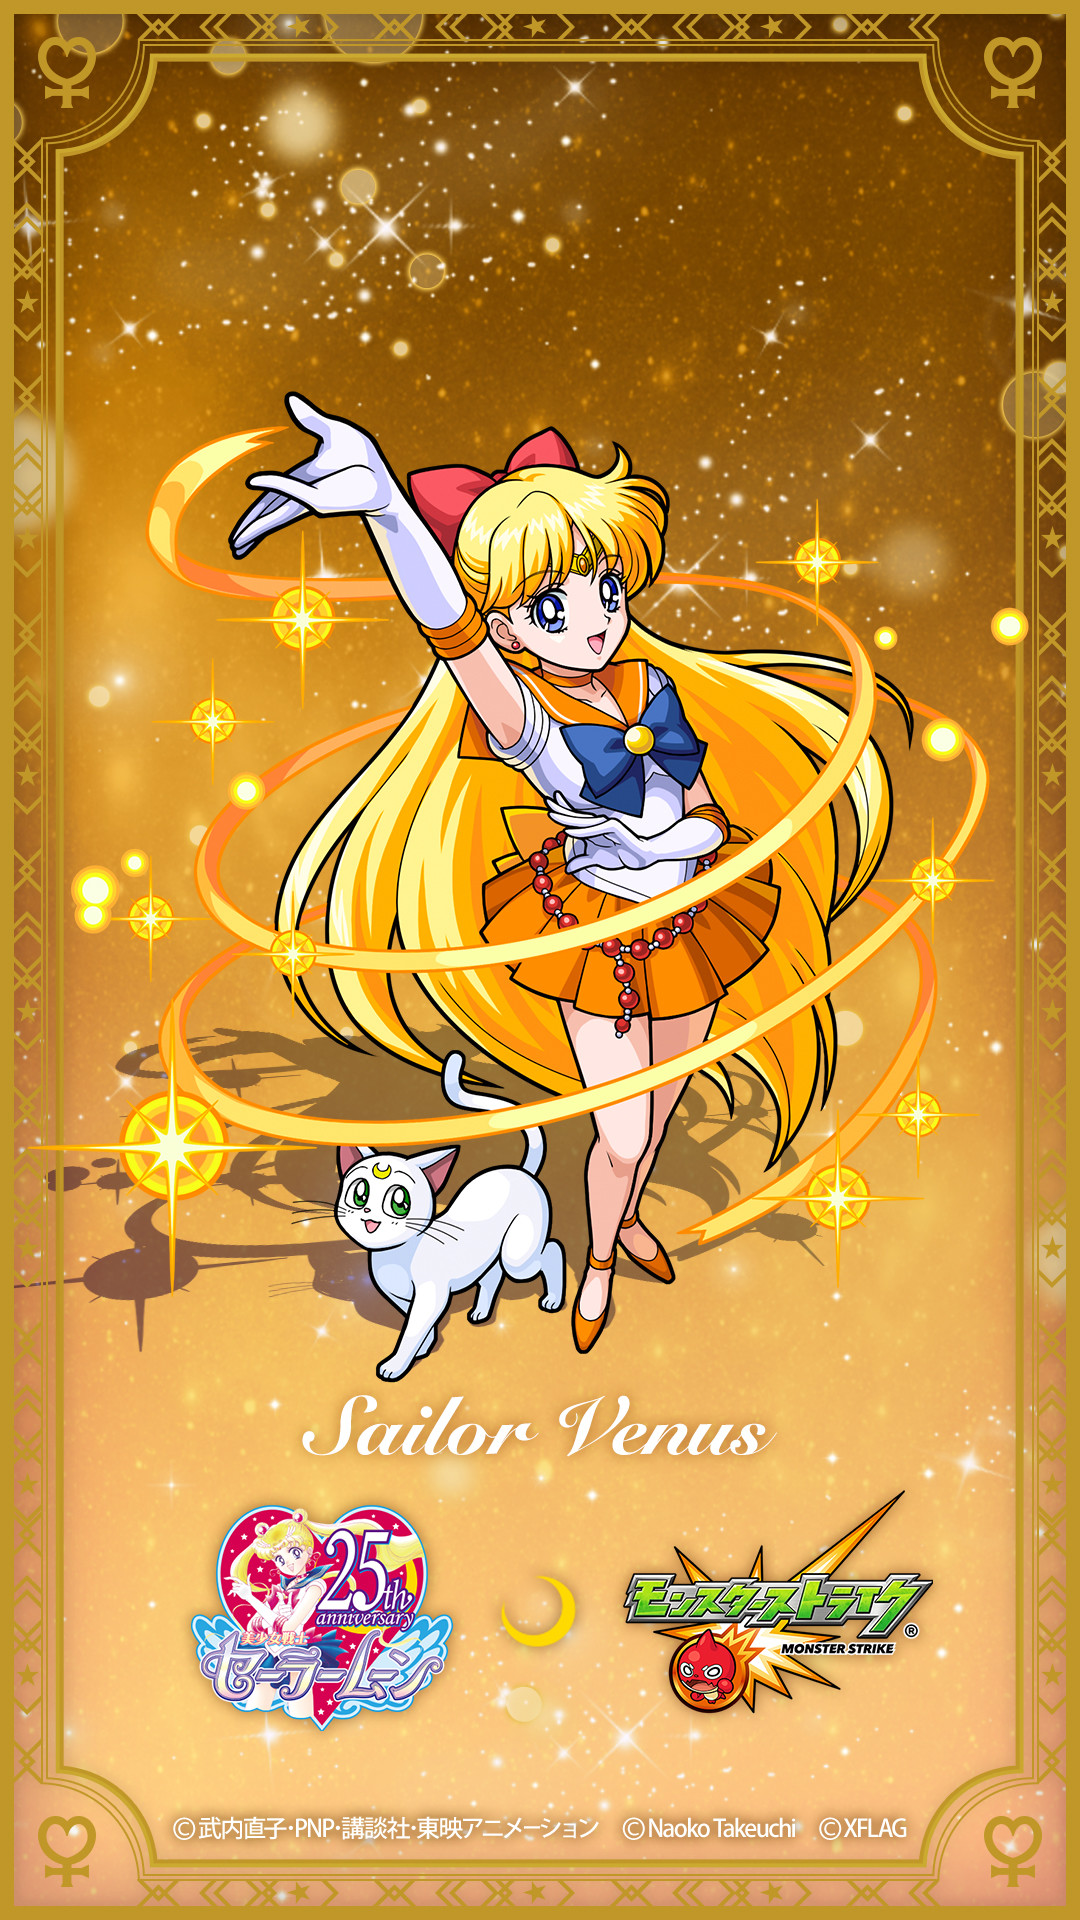 1080x1920 View Fullsize Sailor Venus Image